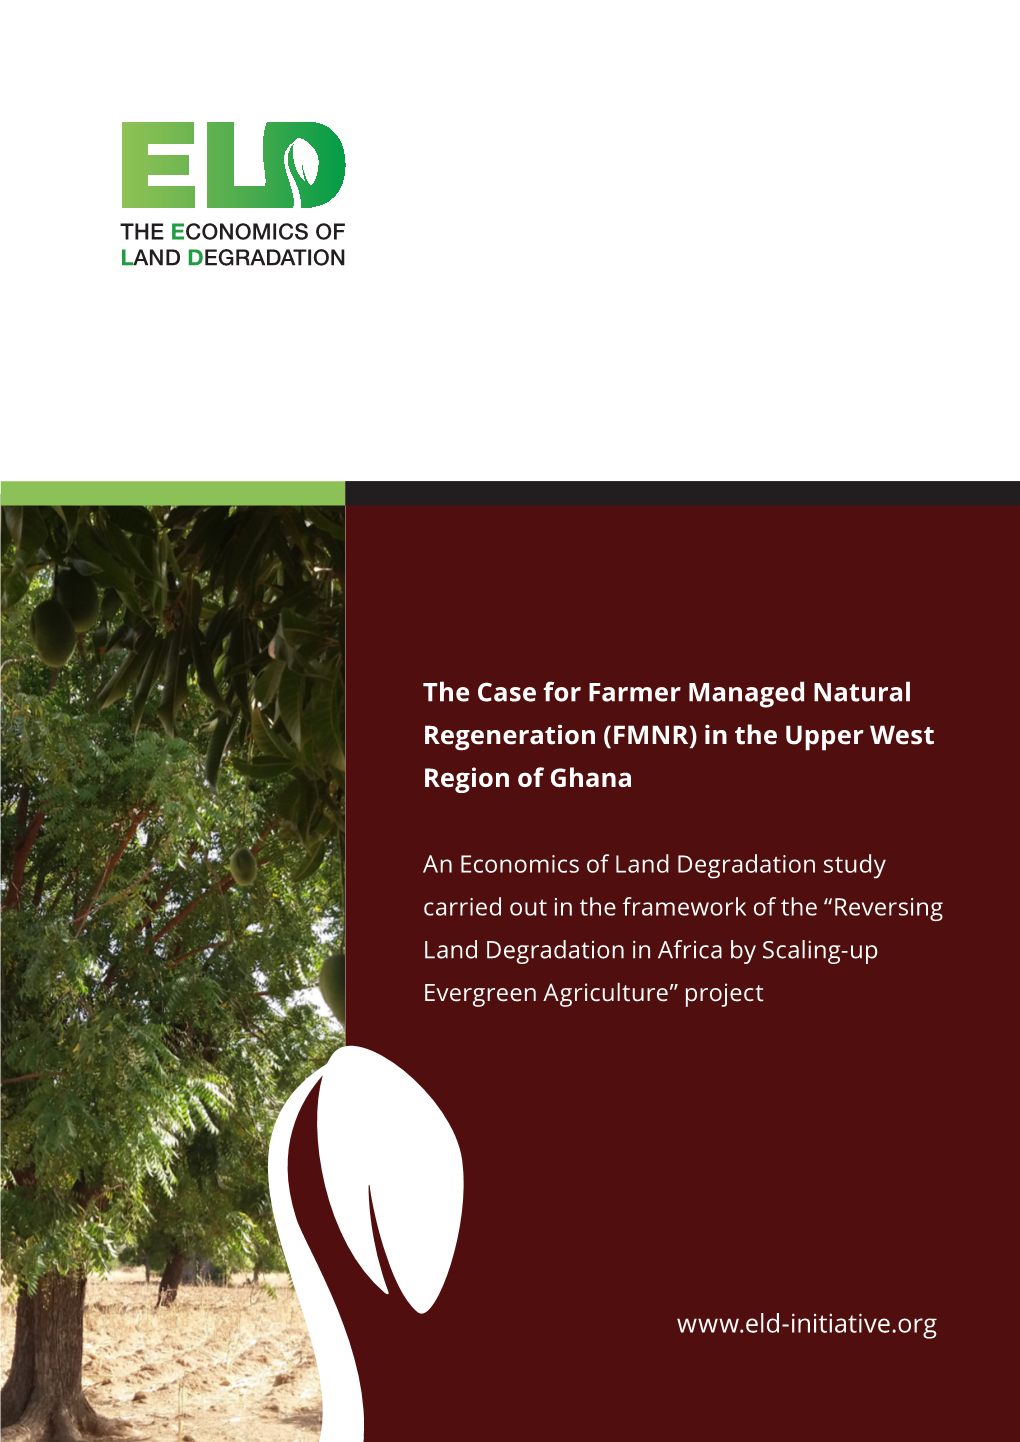 The Case for Farmer Managed Natural Regeneration (FMNR) in the Upper West Region of Ghana